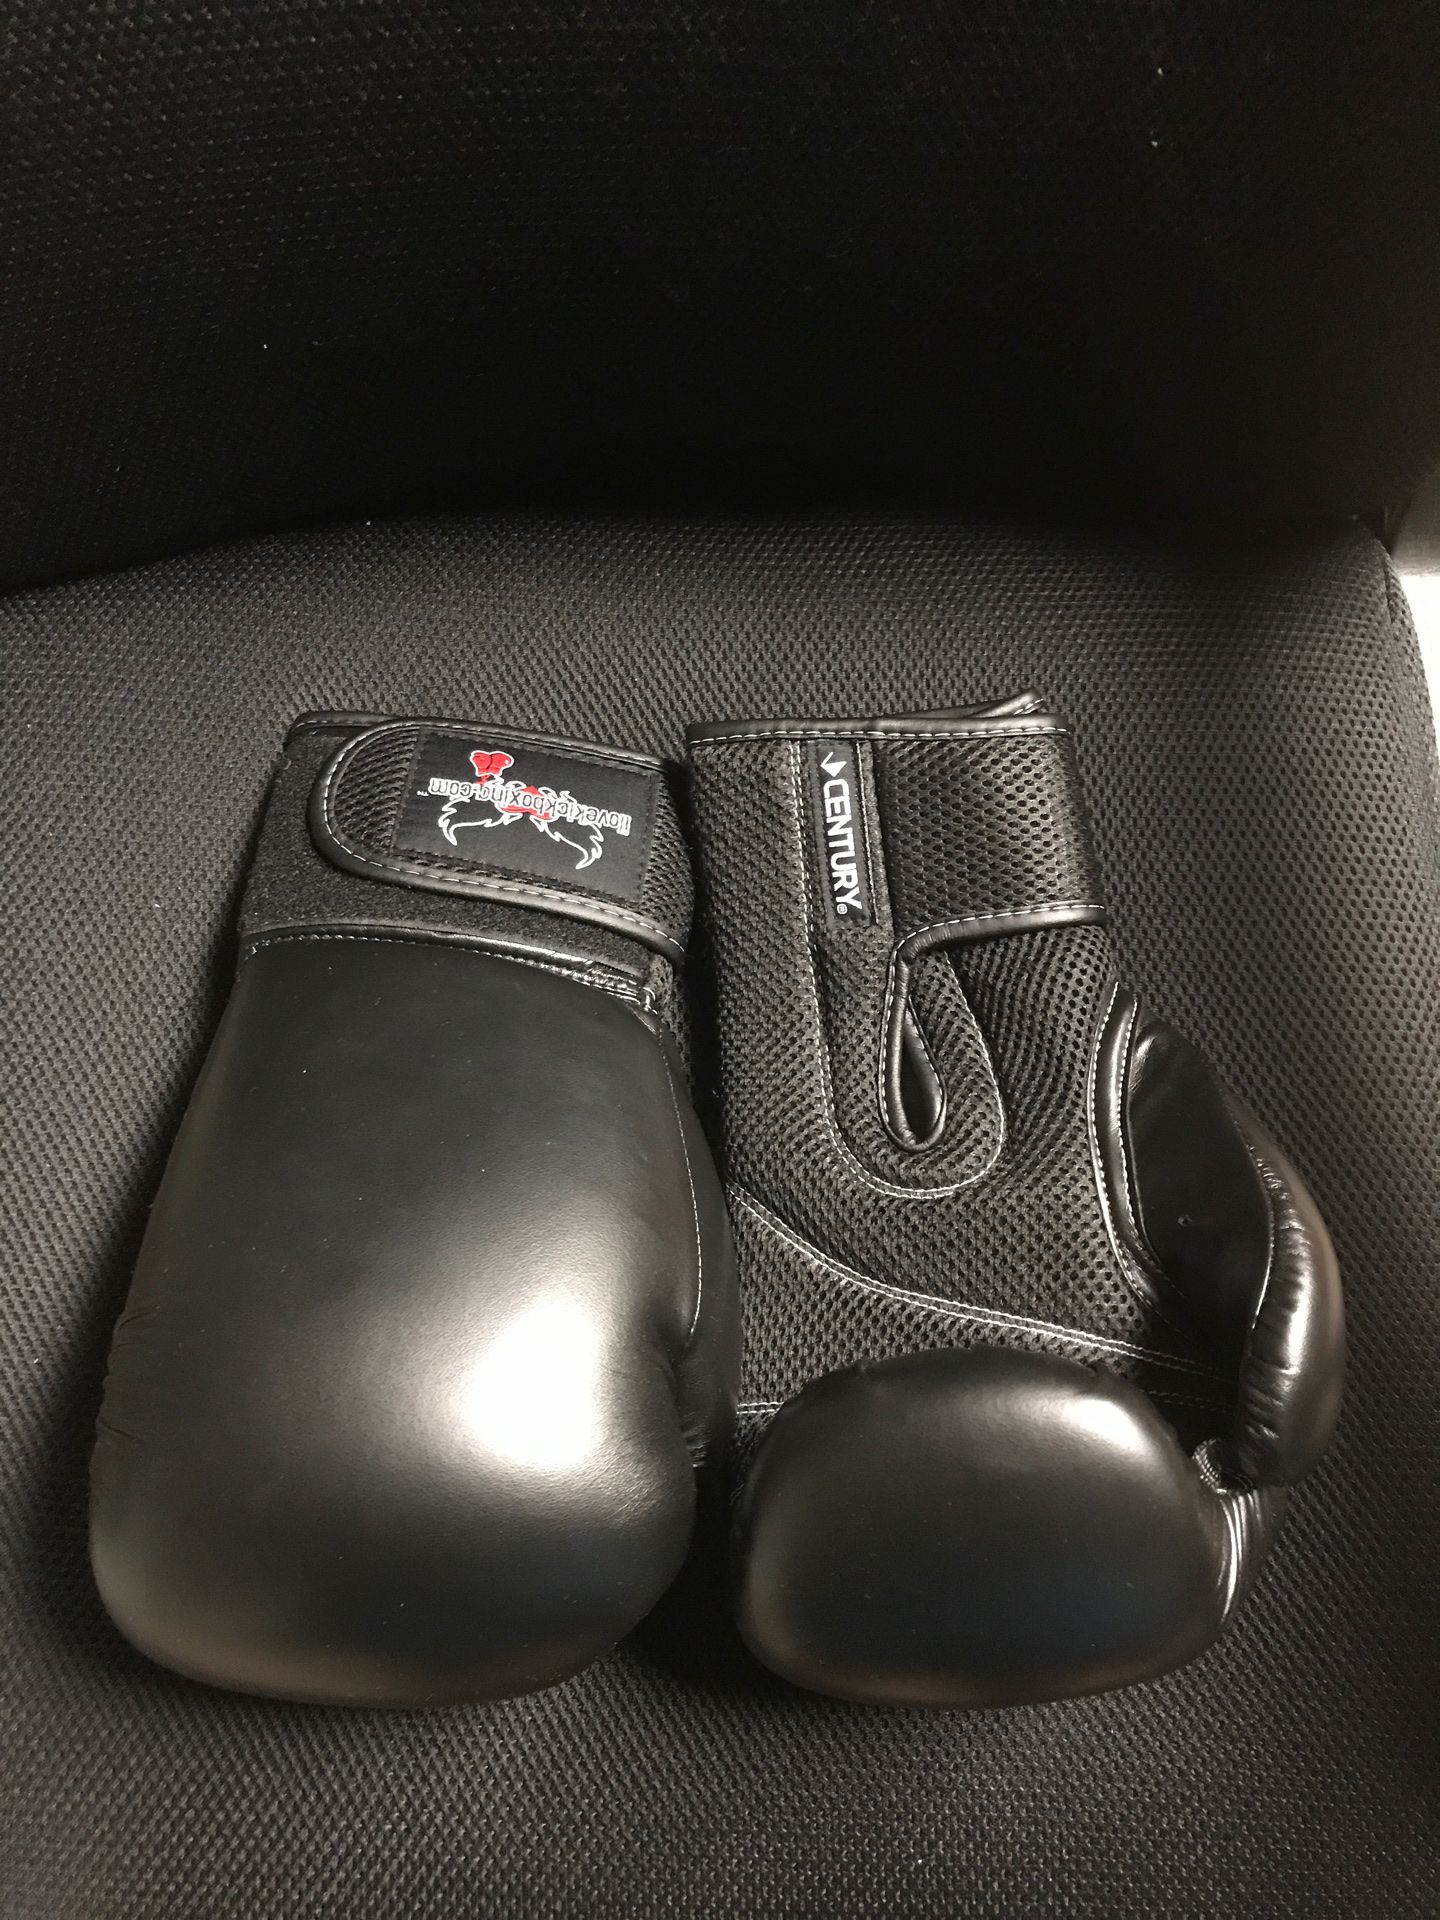 Century Never Used KickBoxing Gloves